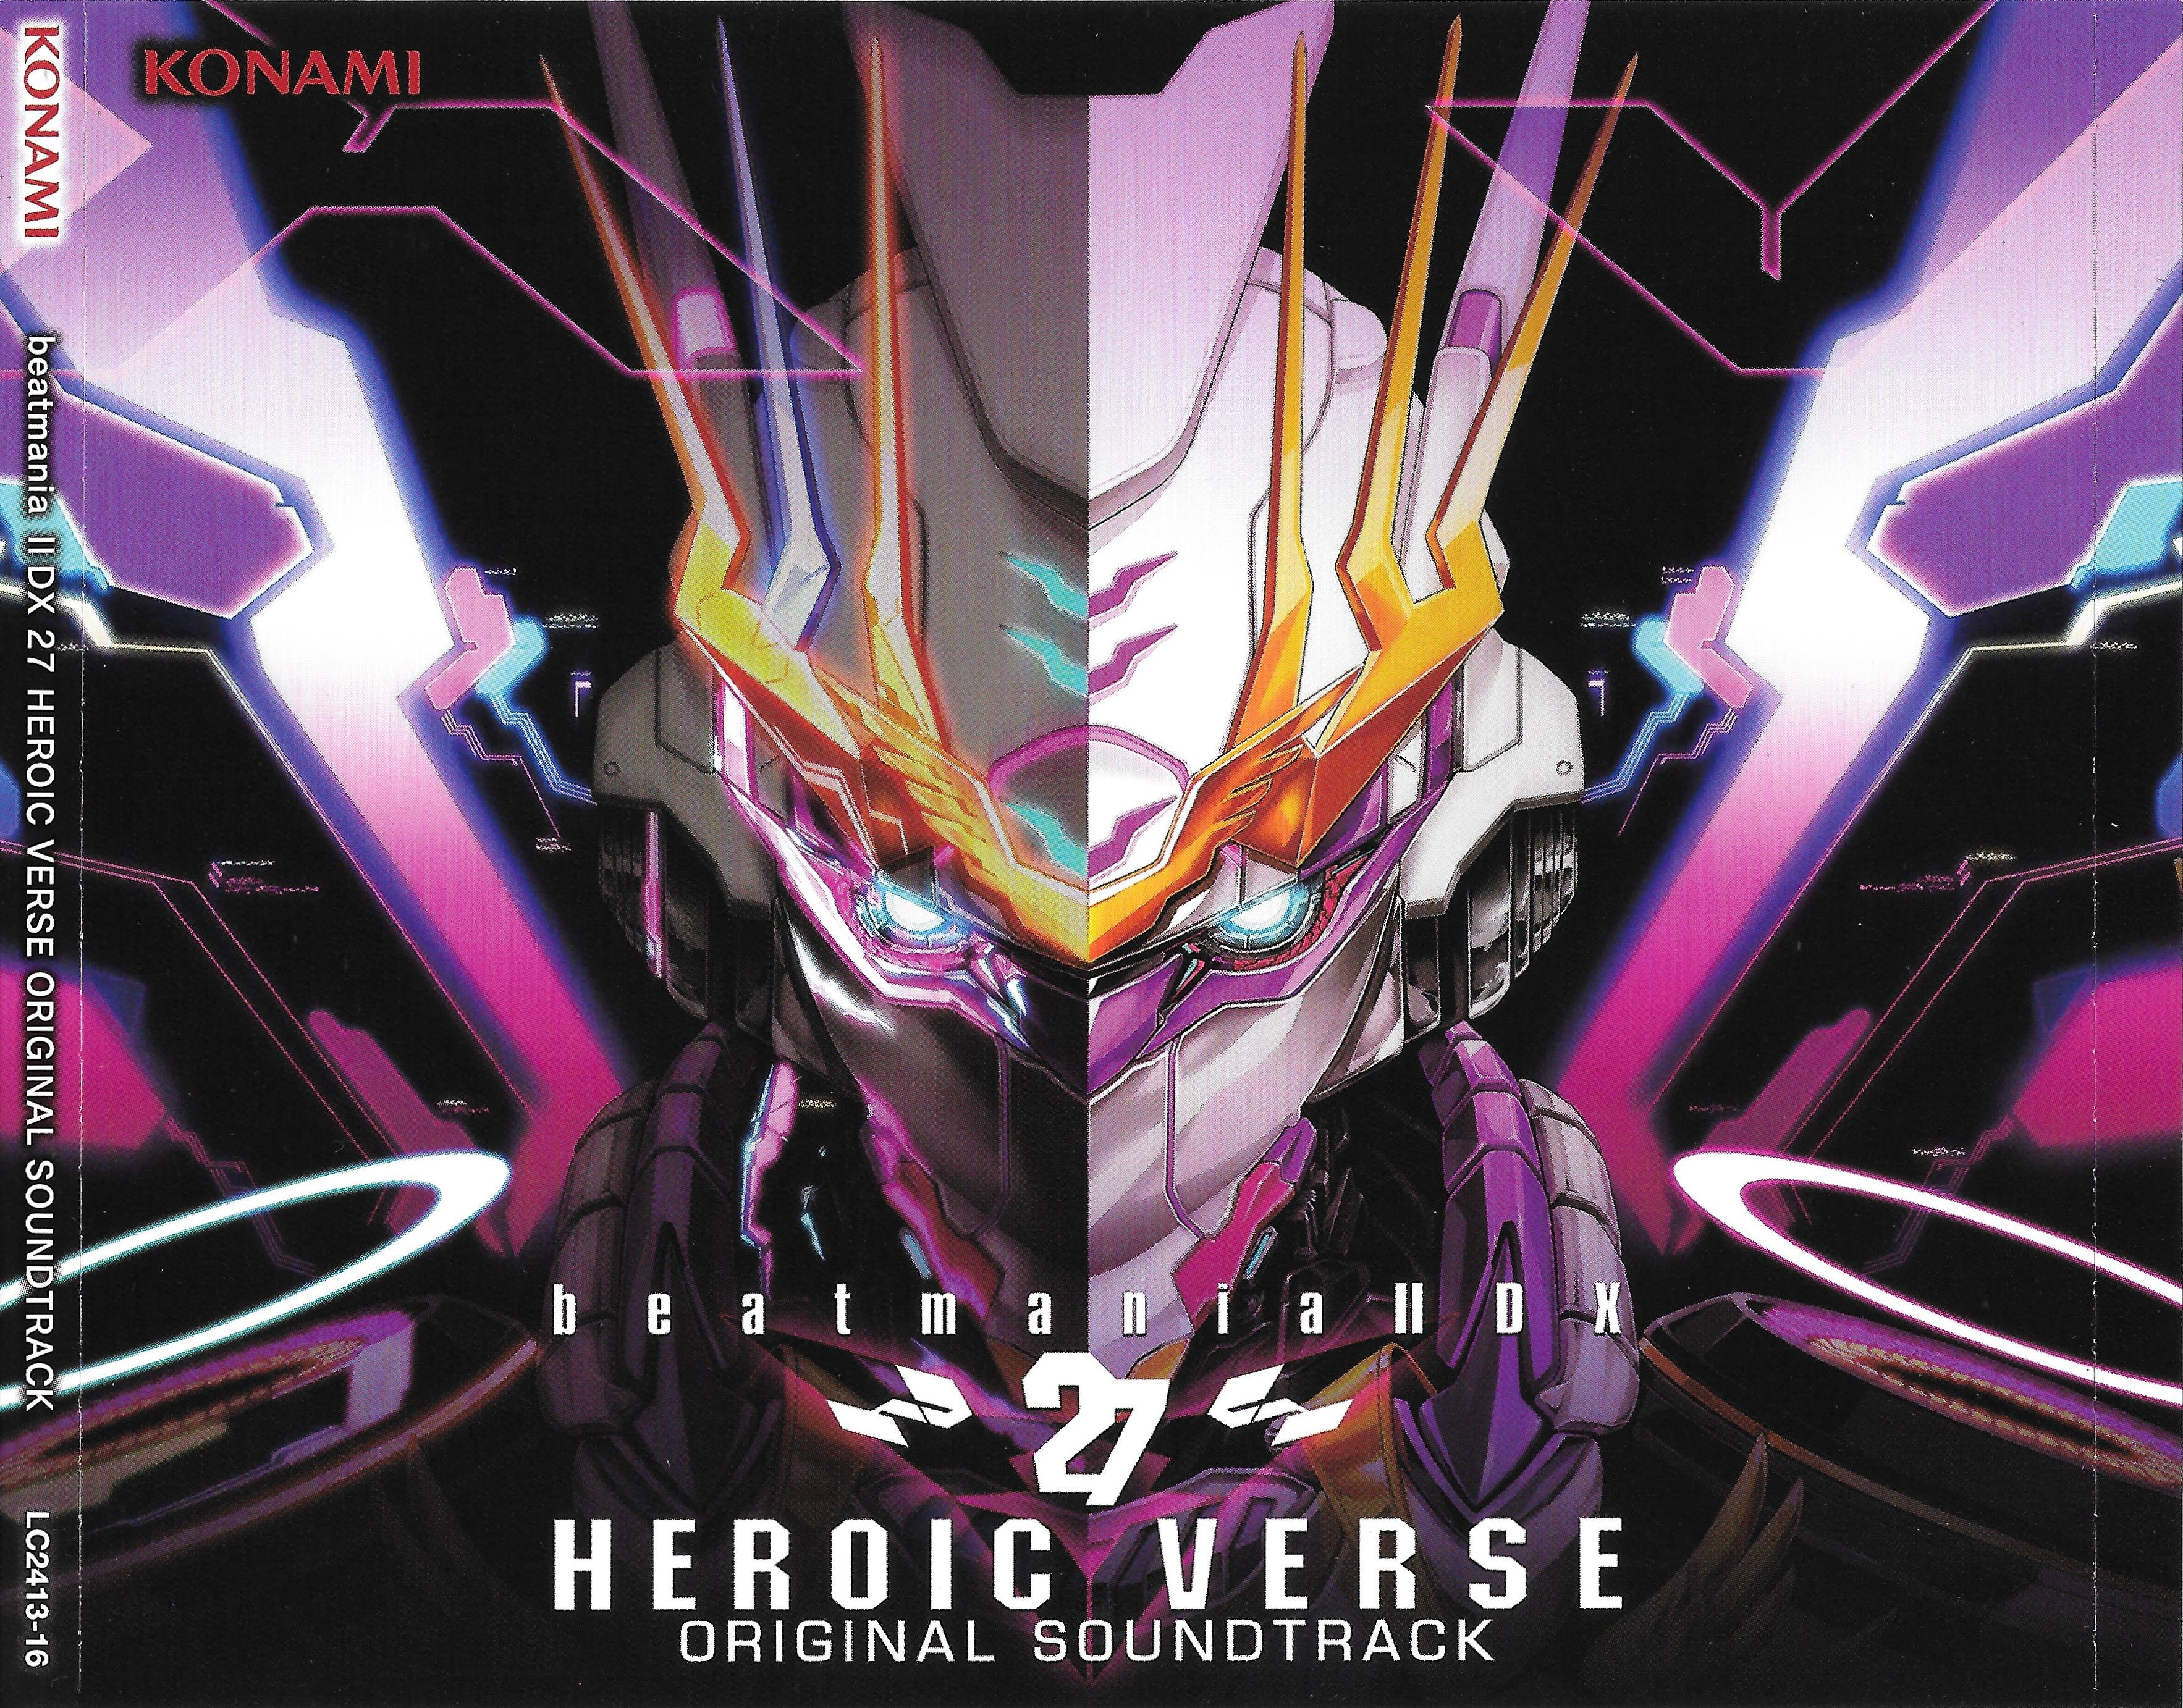 beatmania IIDX 27 HEROIC VERSE Original Soundtrack Selection